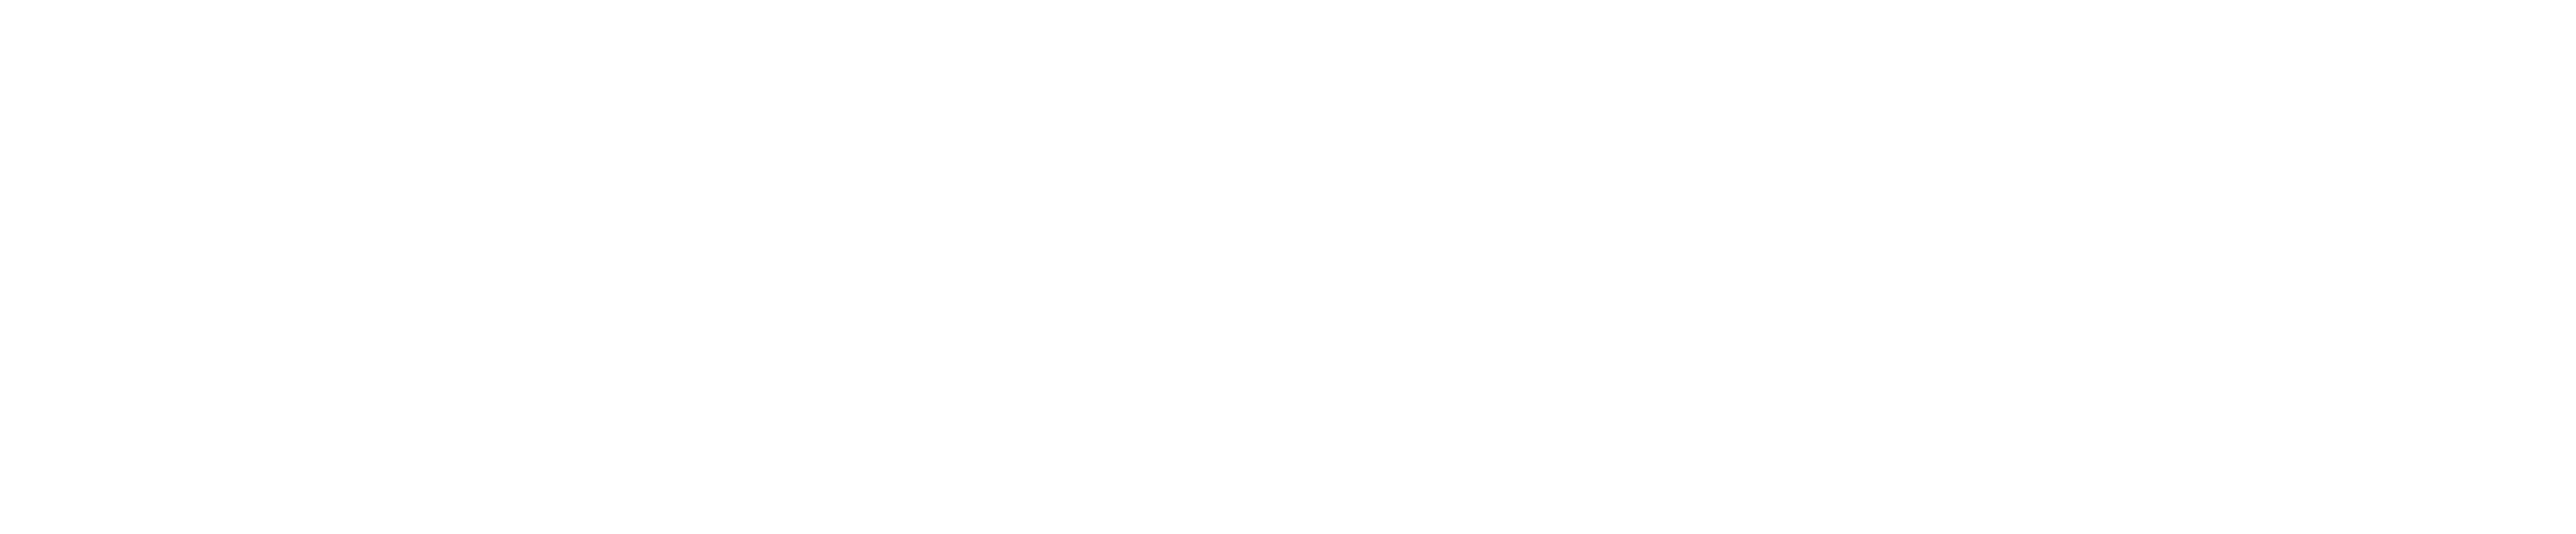 missing brooklyn-steel logo